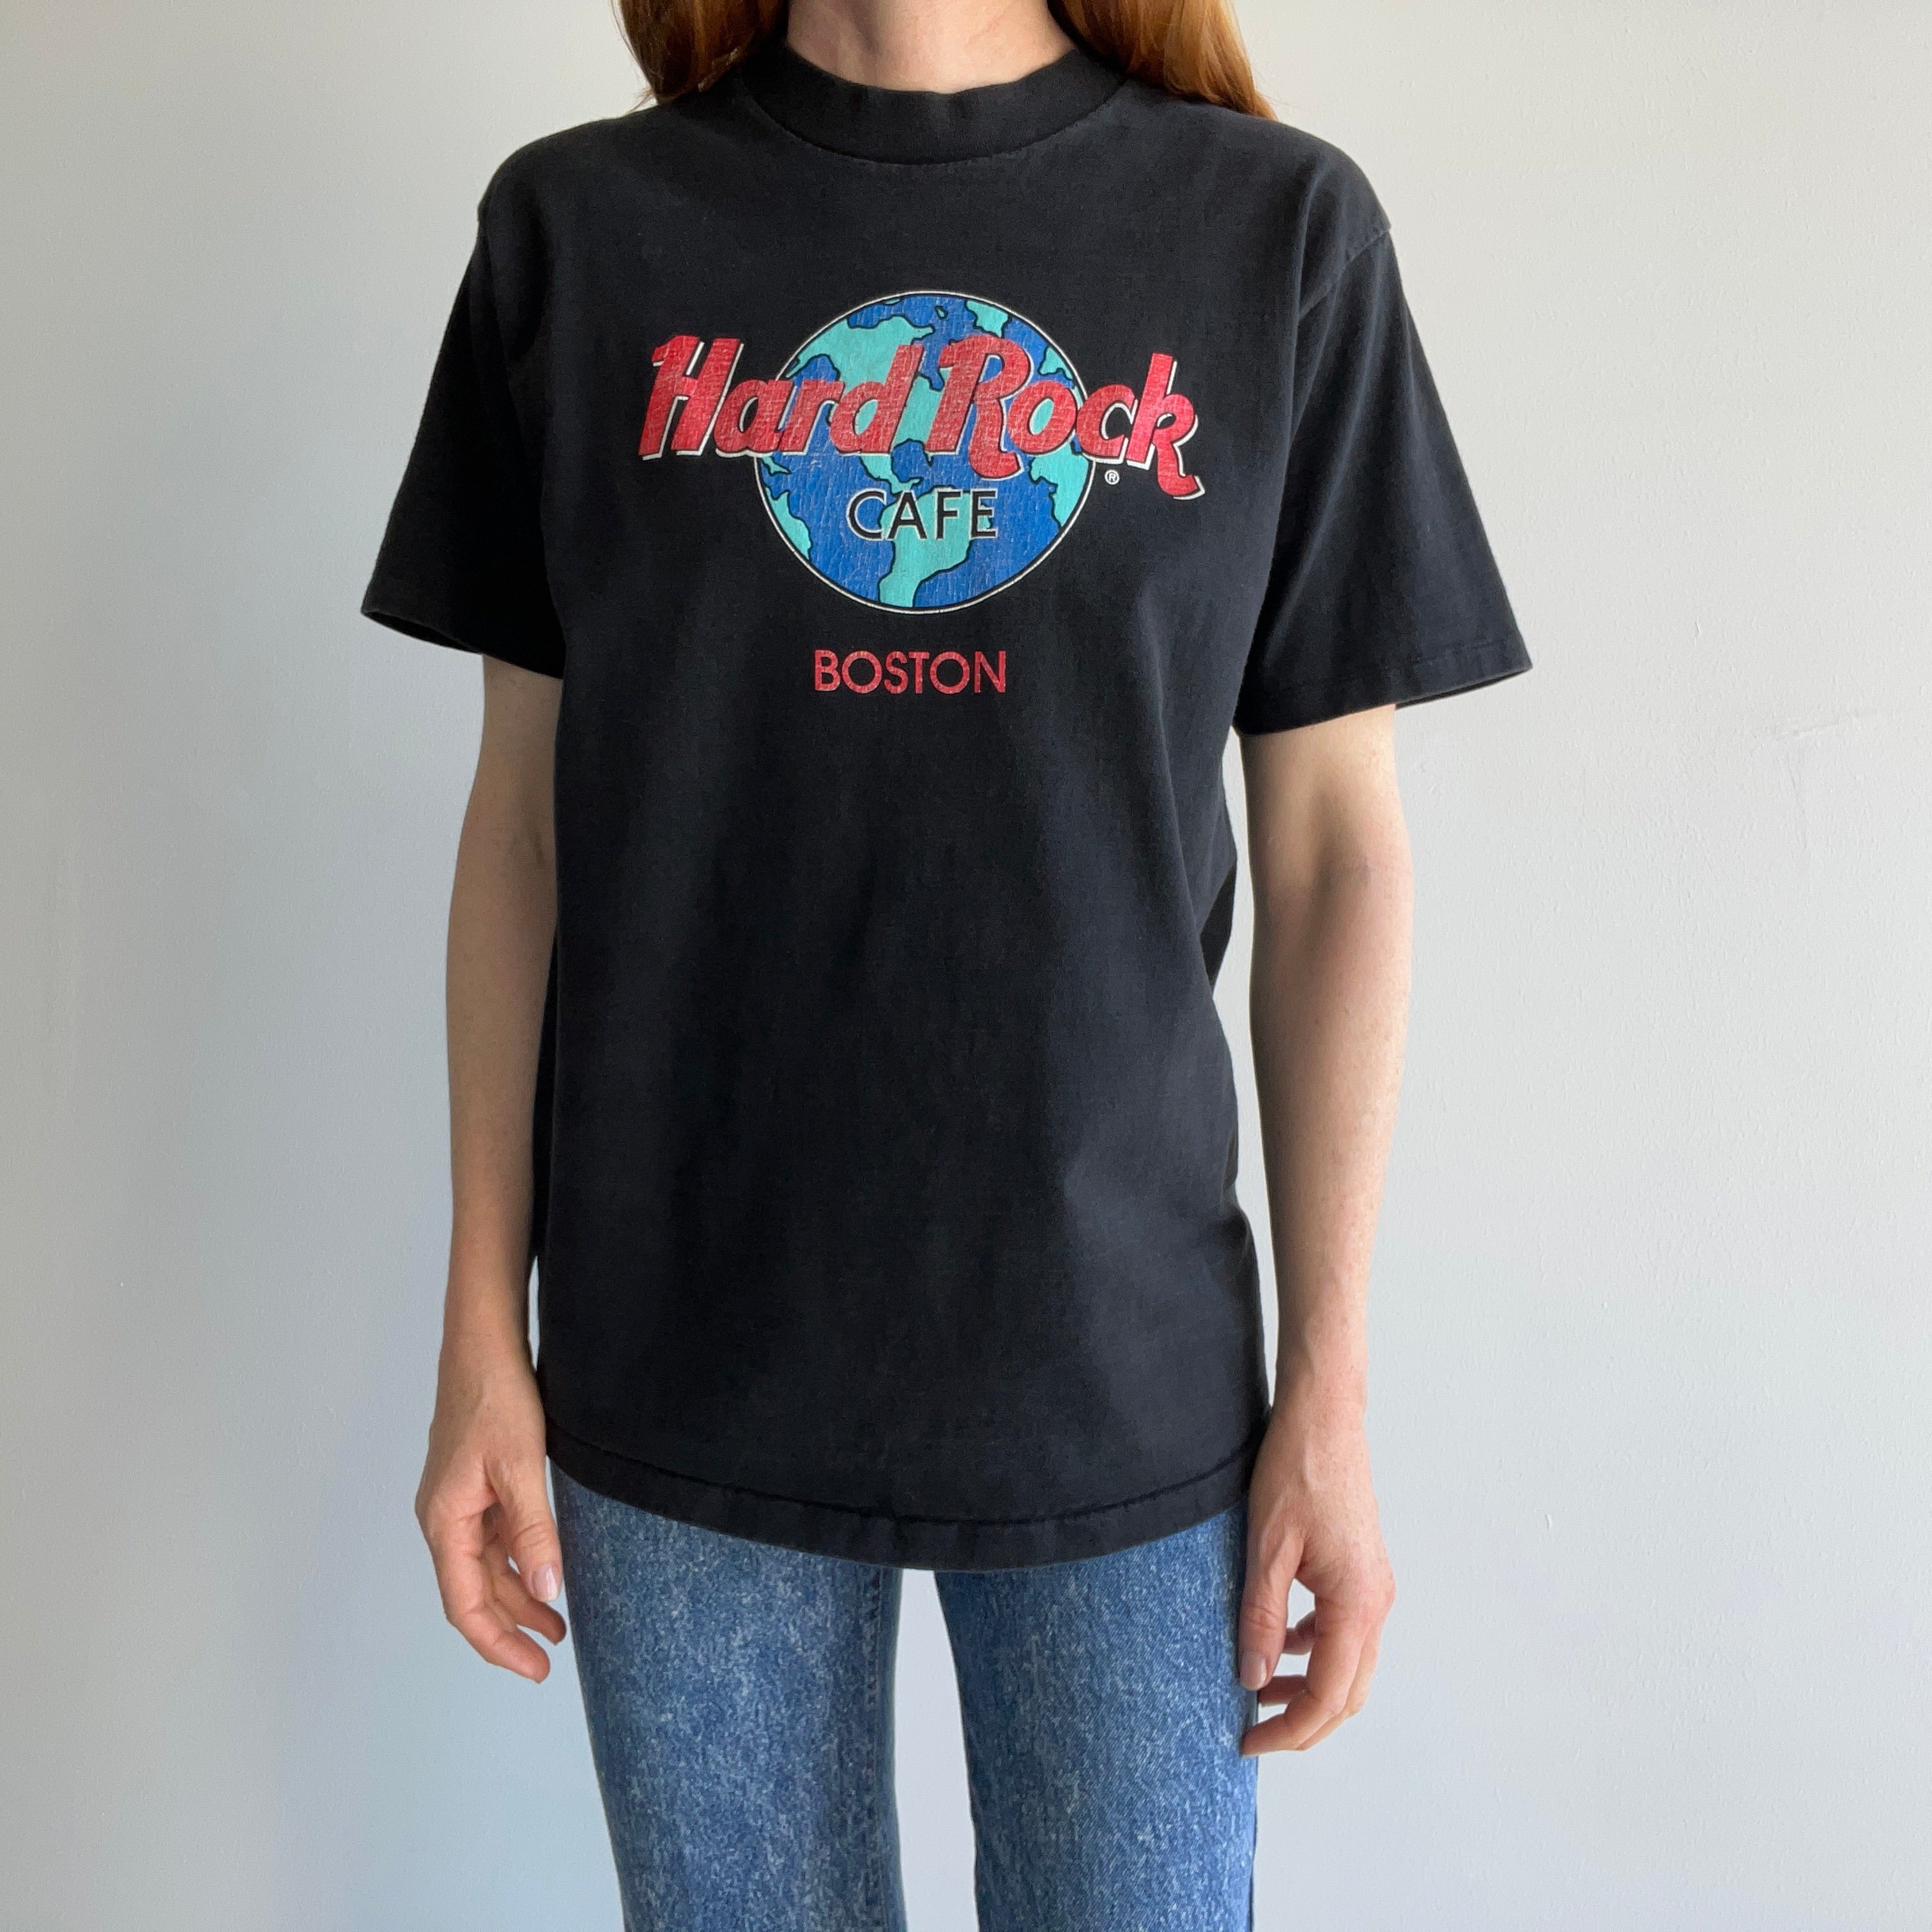 1980s Hard Rock Boston T-Shirt